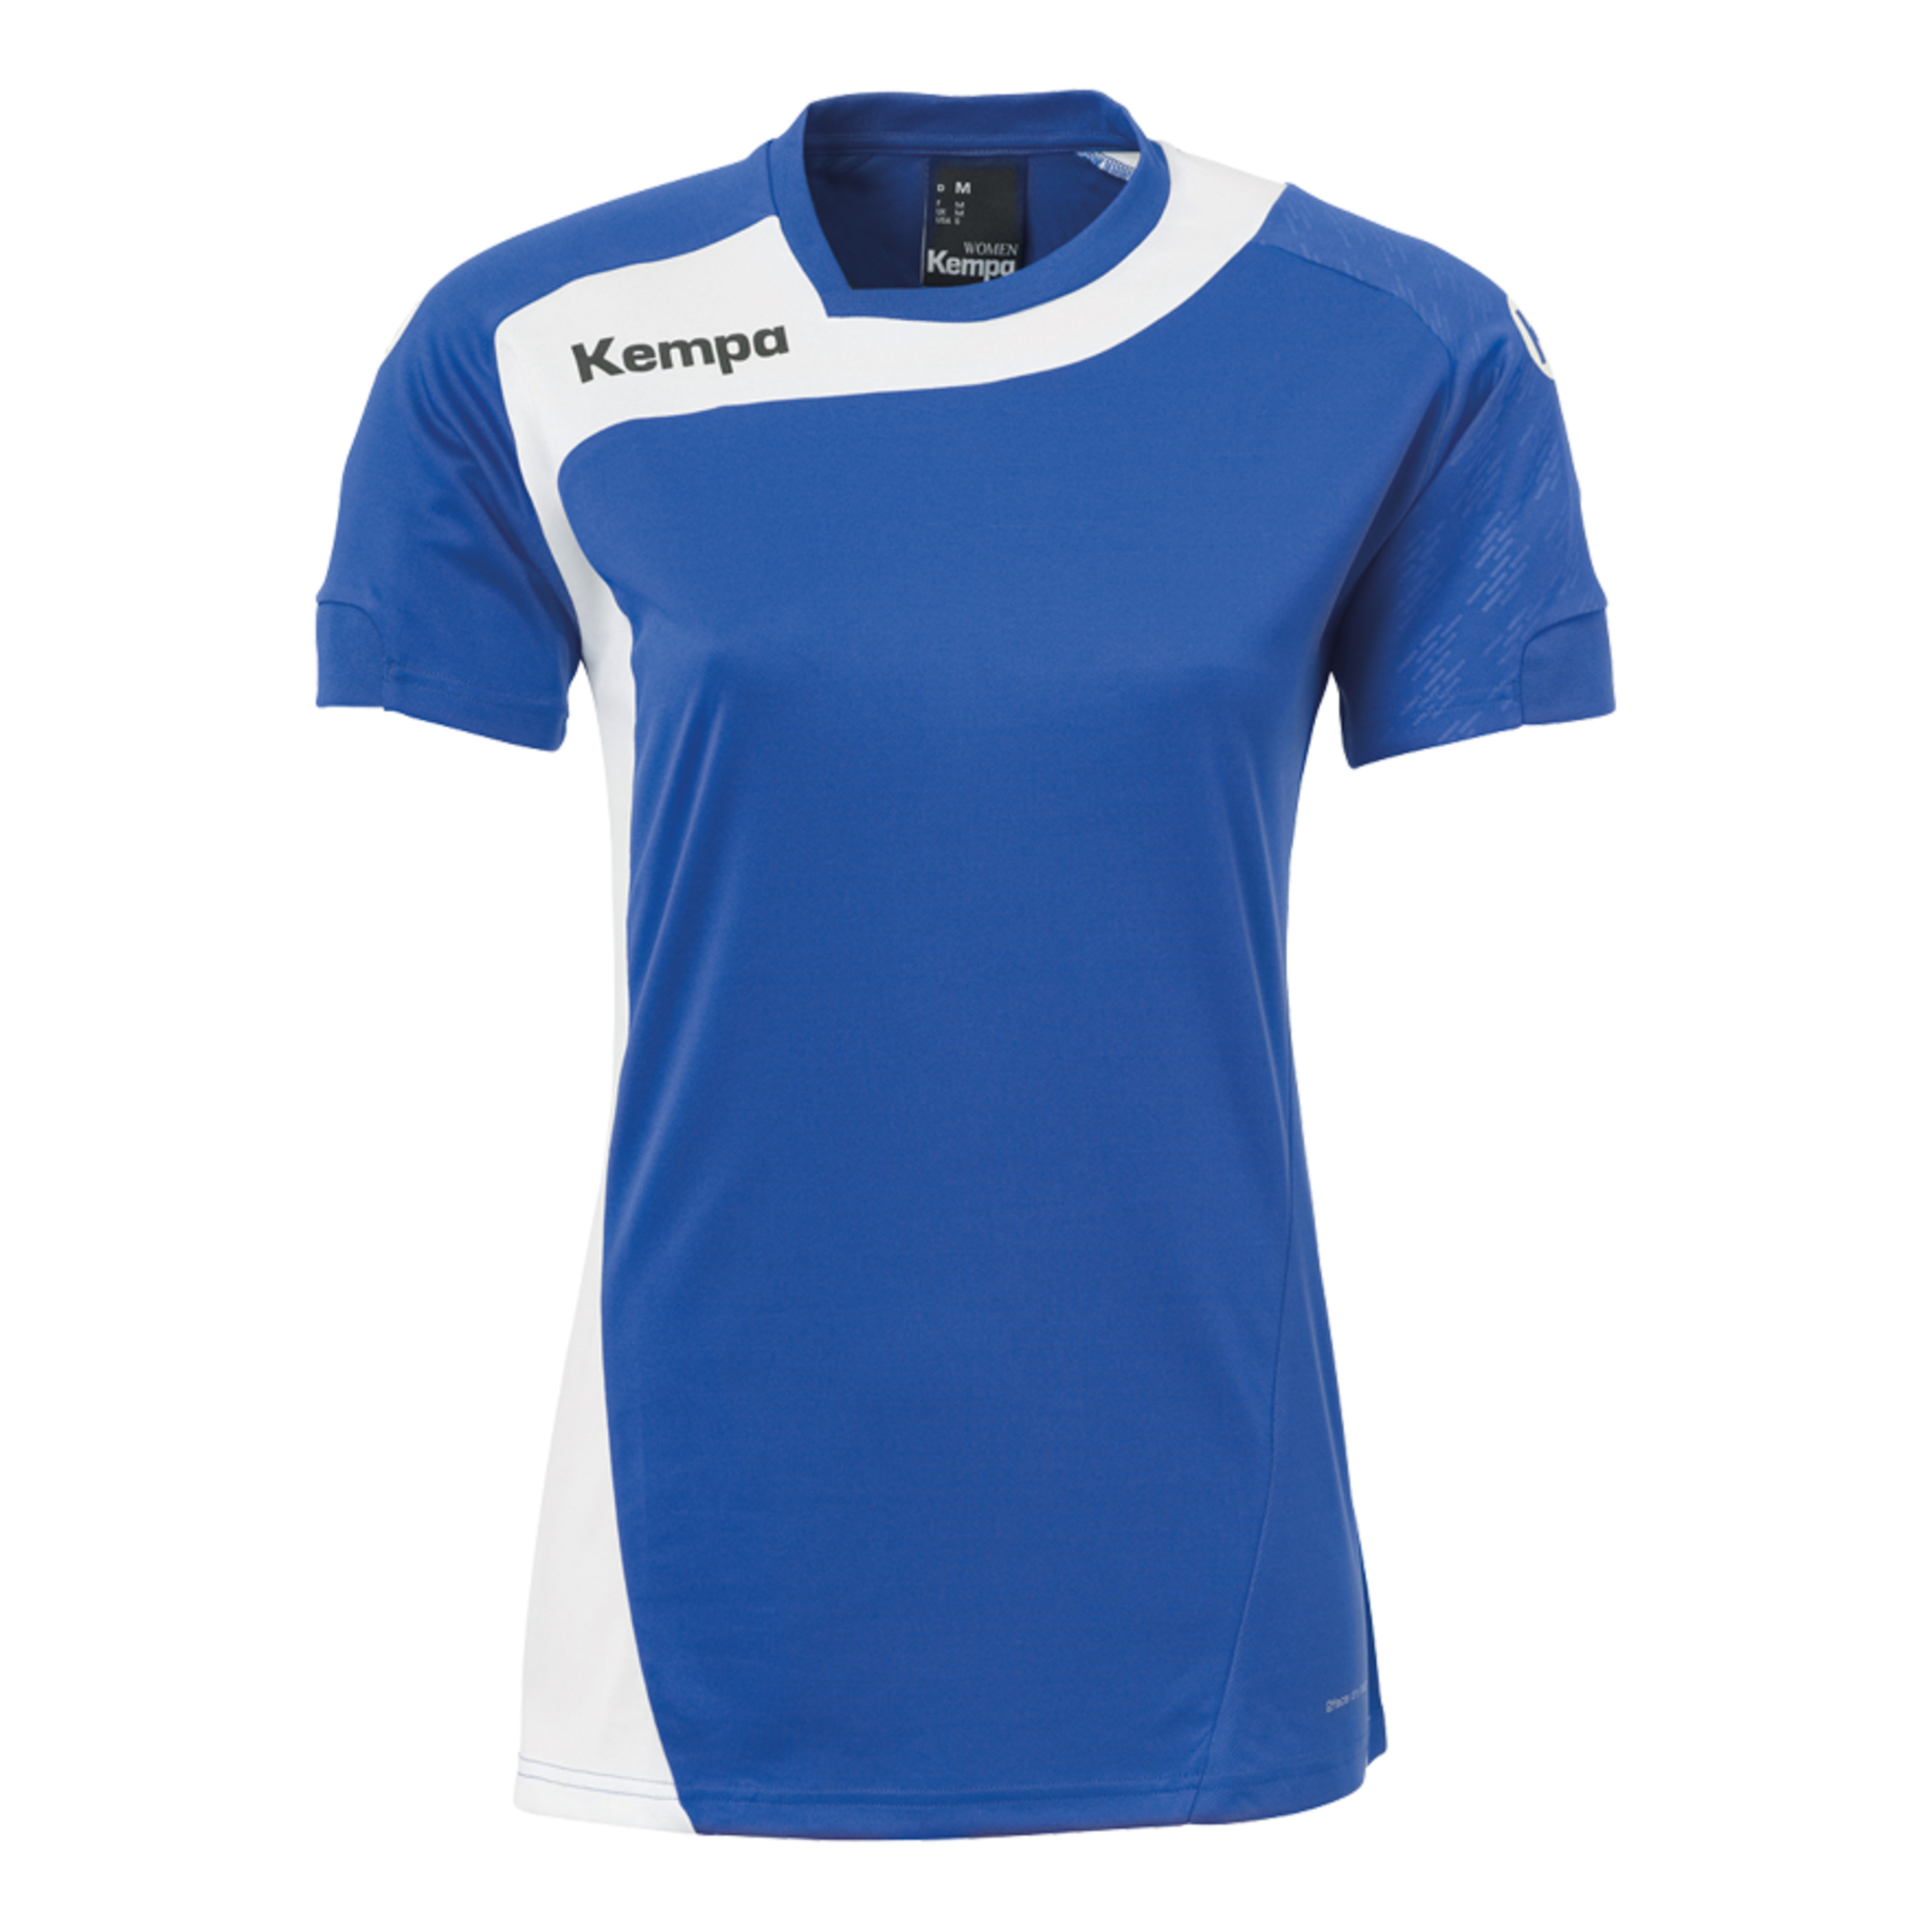 Peak Camiseta De Mujer Azul Royal/blanco Kempa - azul - 